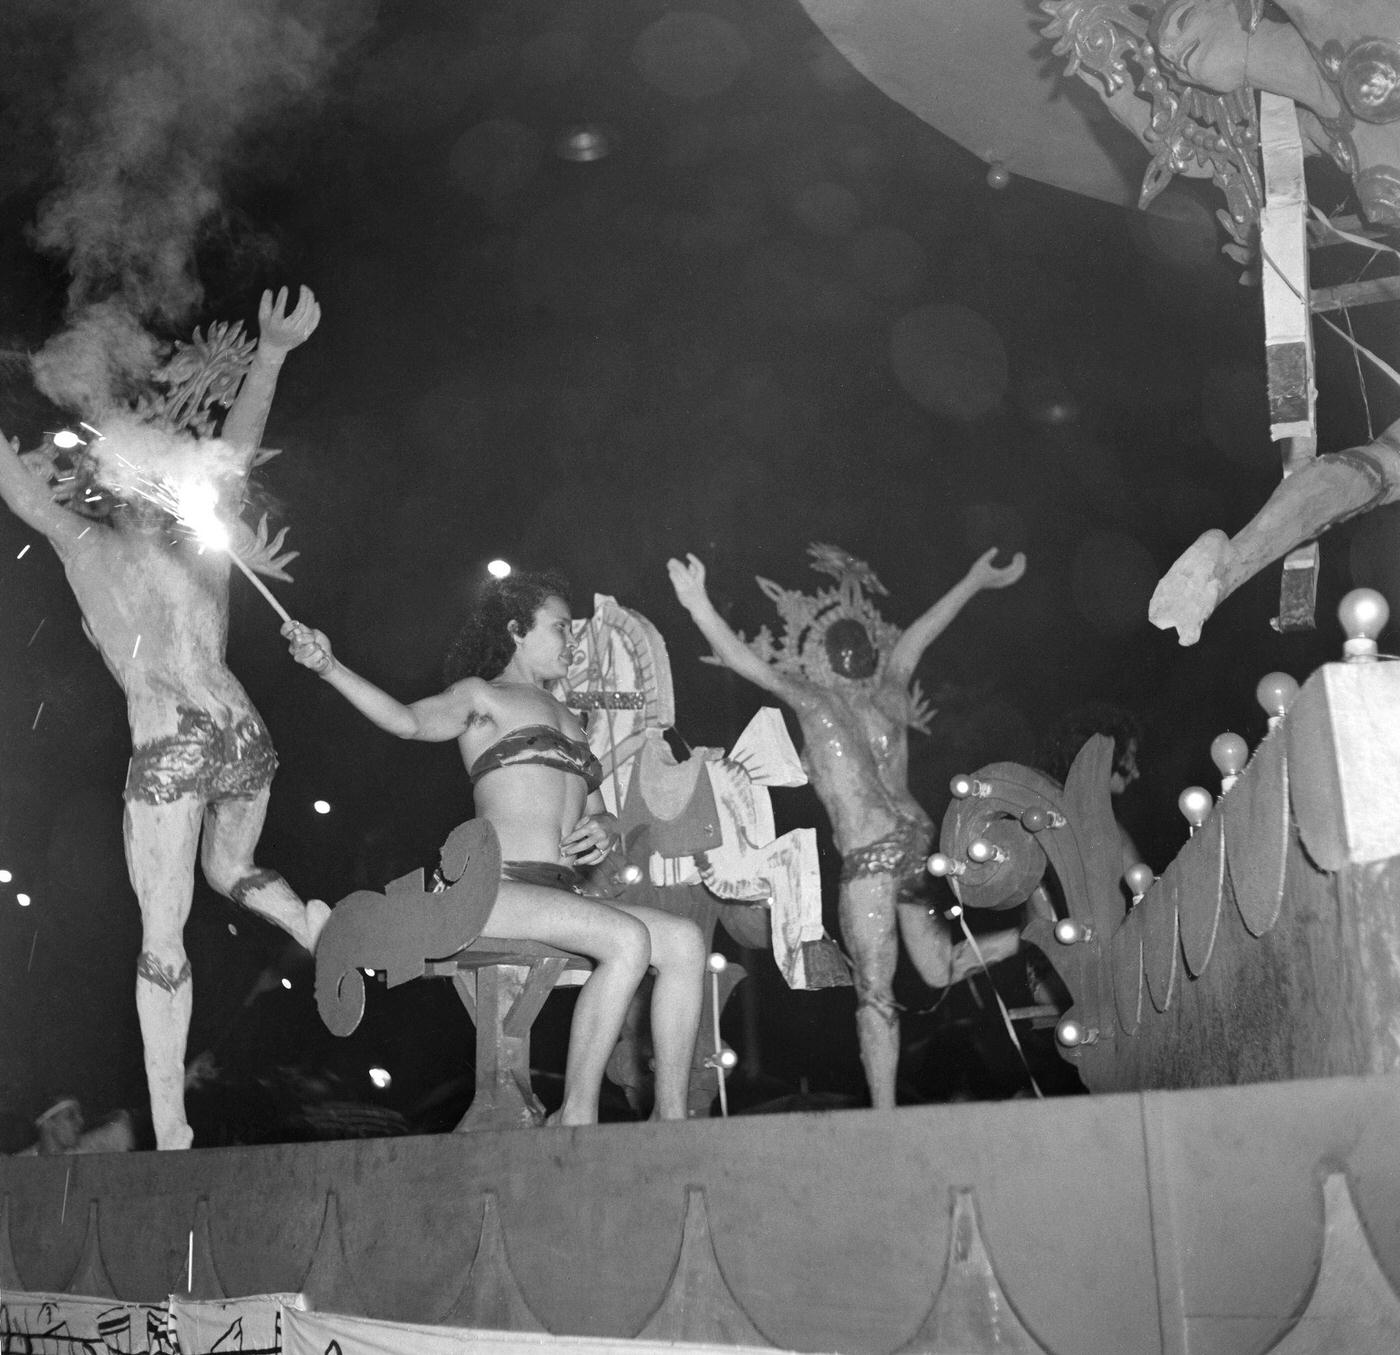 Revelers on floats during Rio de Janeiro's Carnival parade. 1953